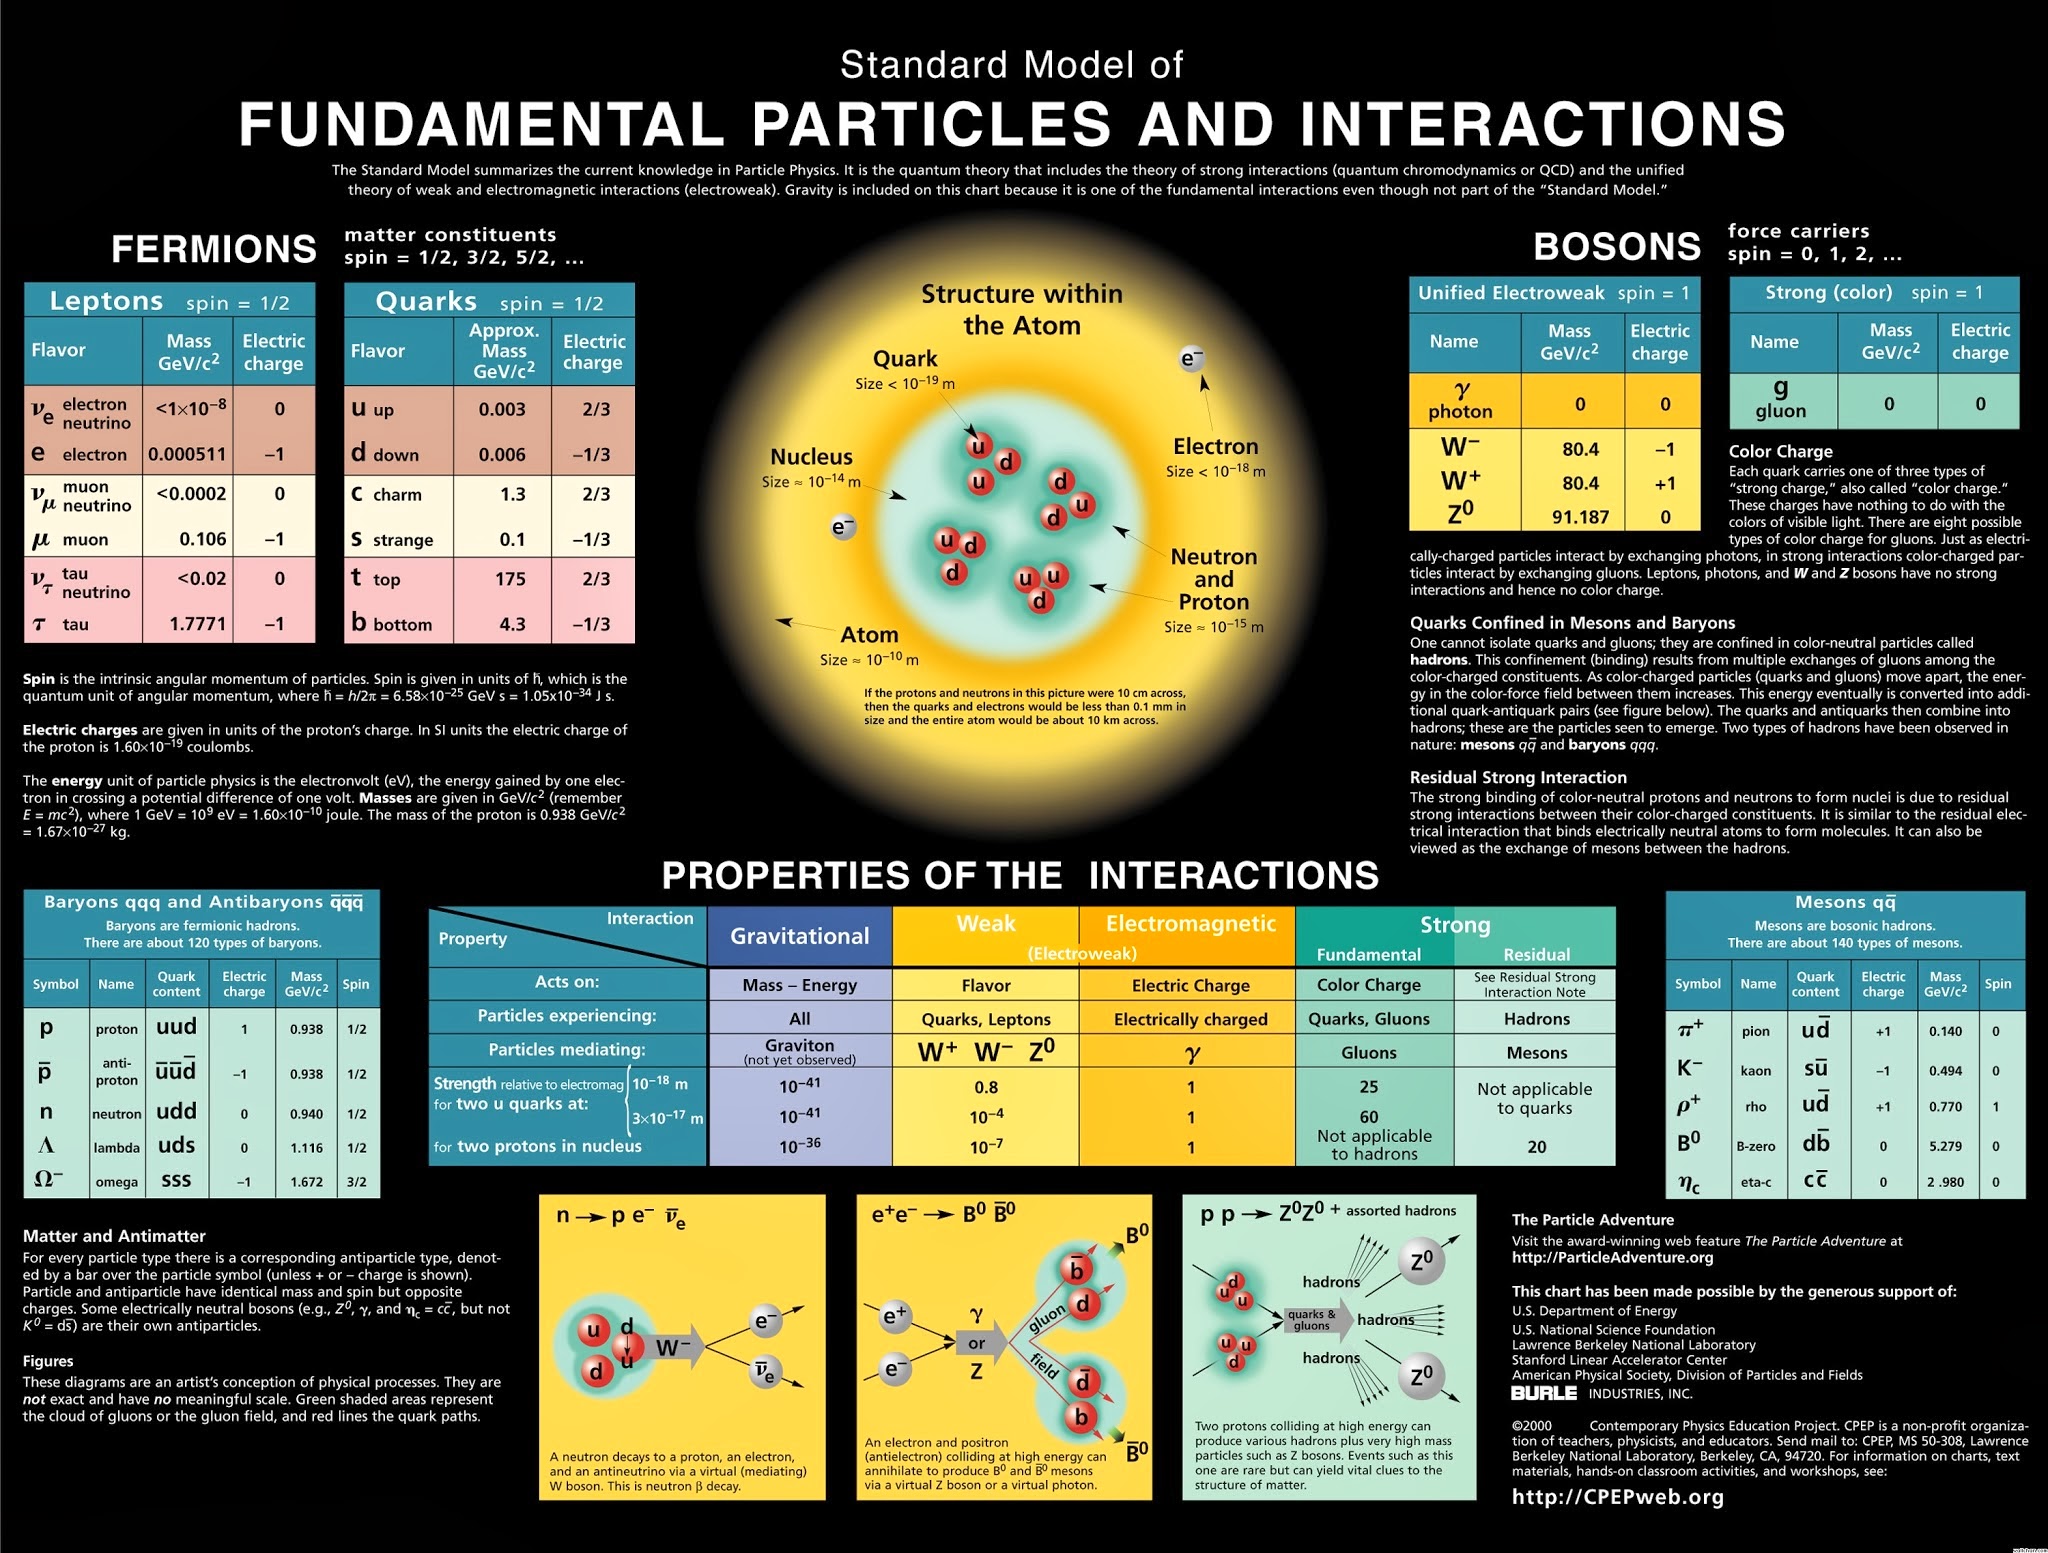 http://acelerandolaciencia.files.wordpress.com/2014/01/standard-model-particles-and-their-interactions.jpg